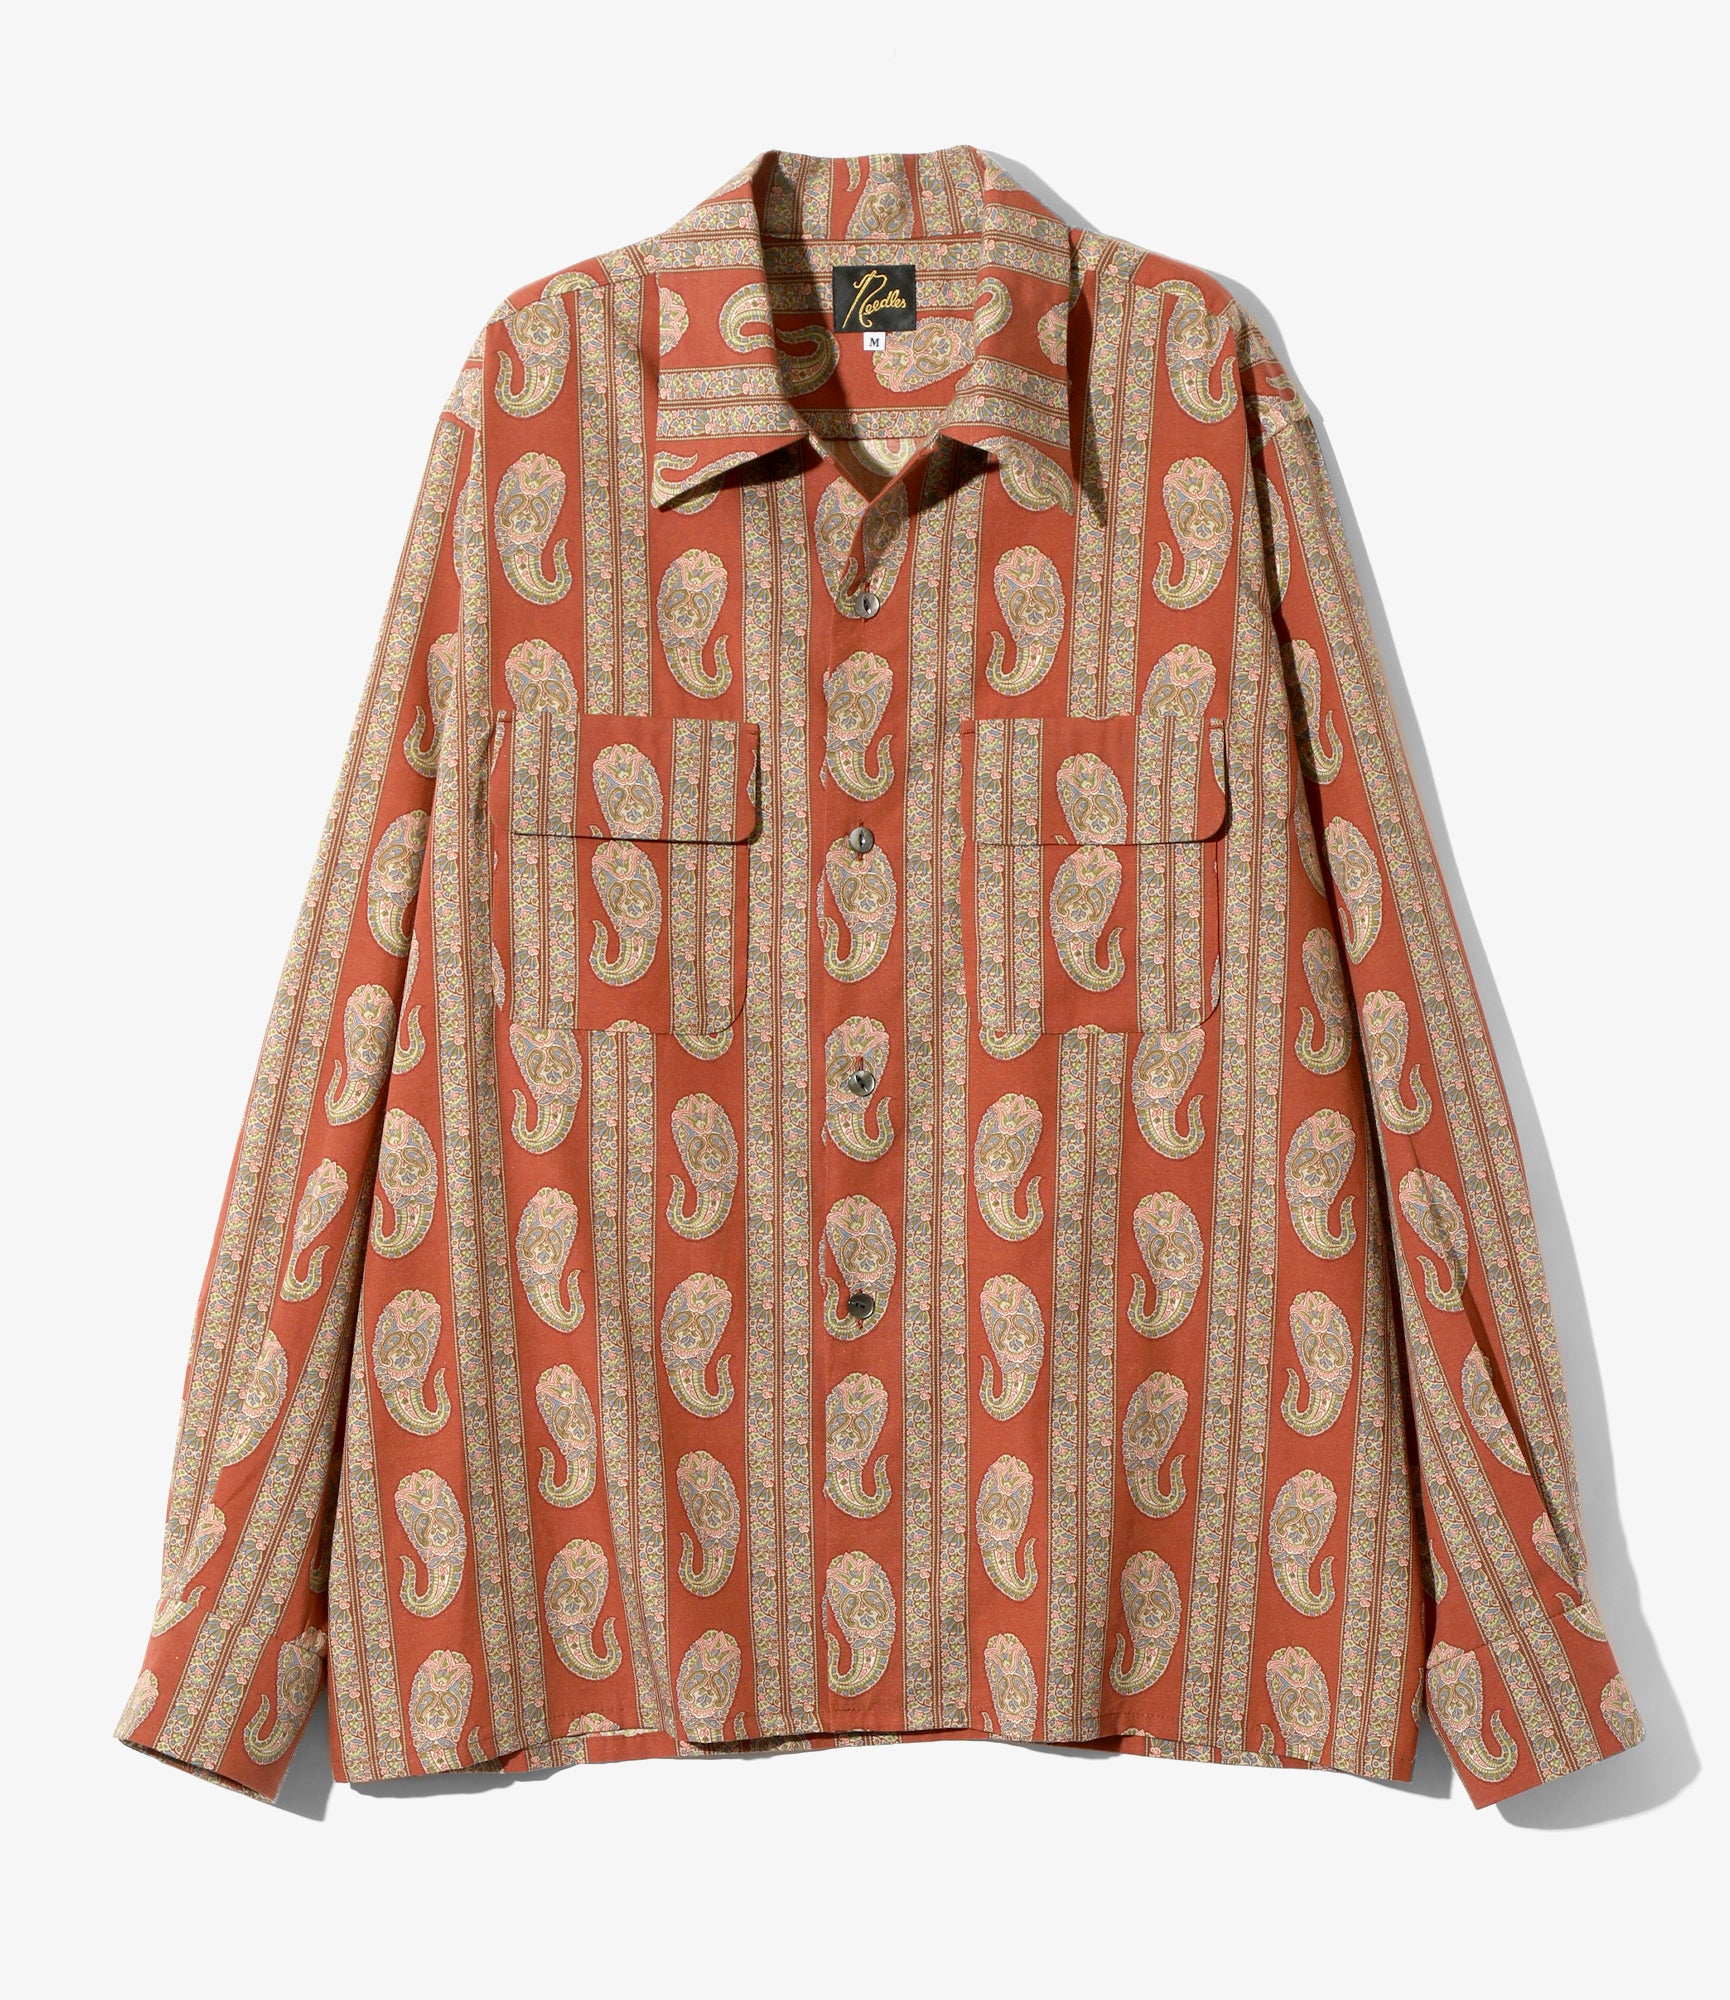 Needles Classic Shirt - R/C Lawn Cloth / Paisley Printed - Brick